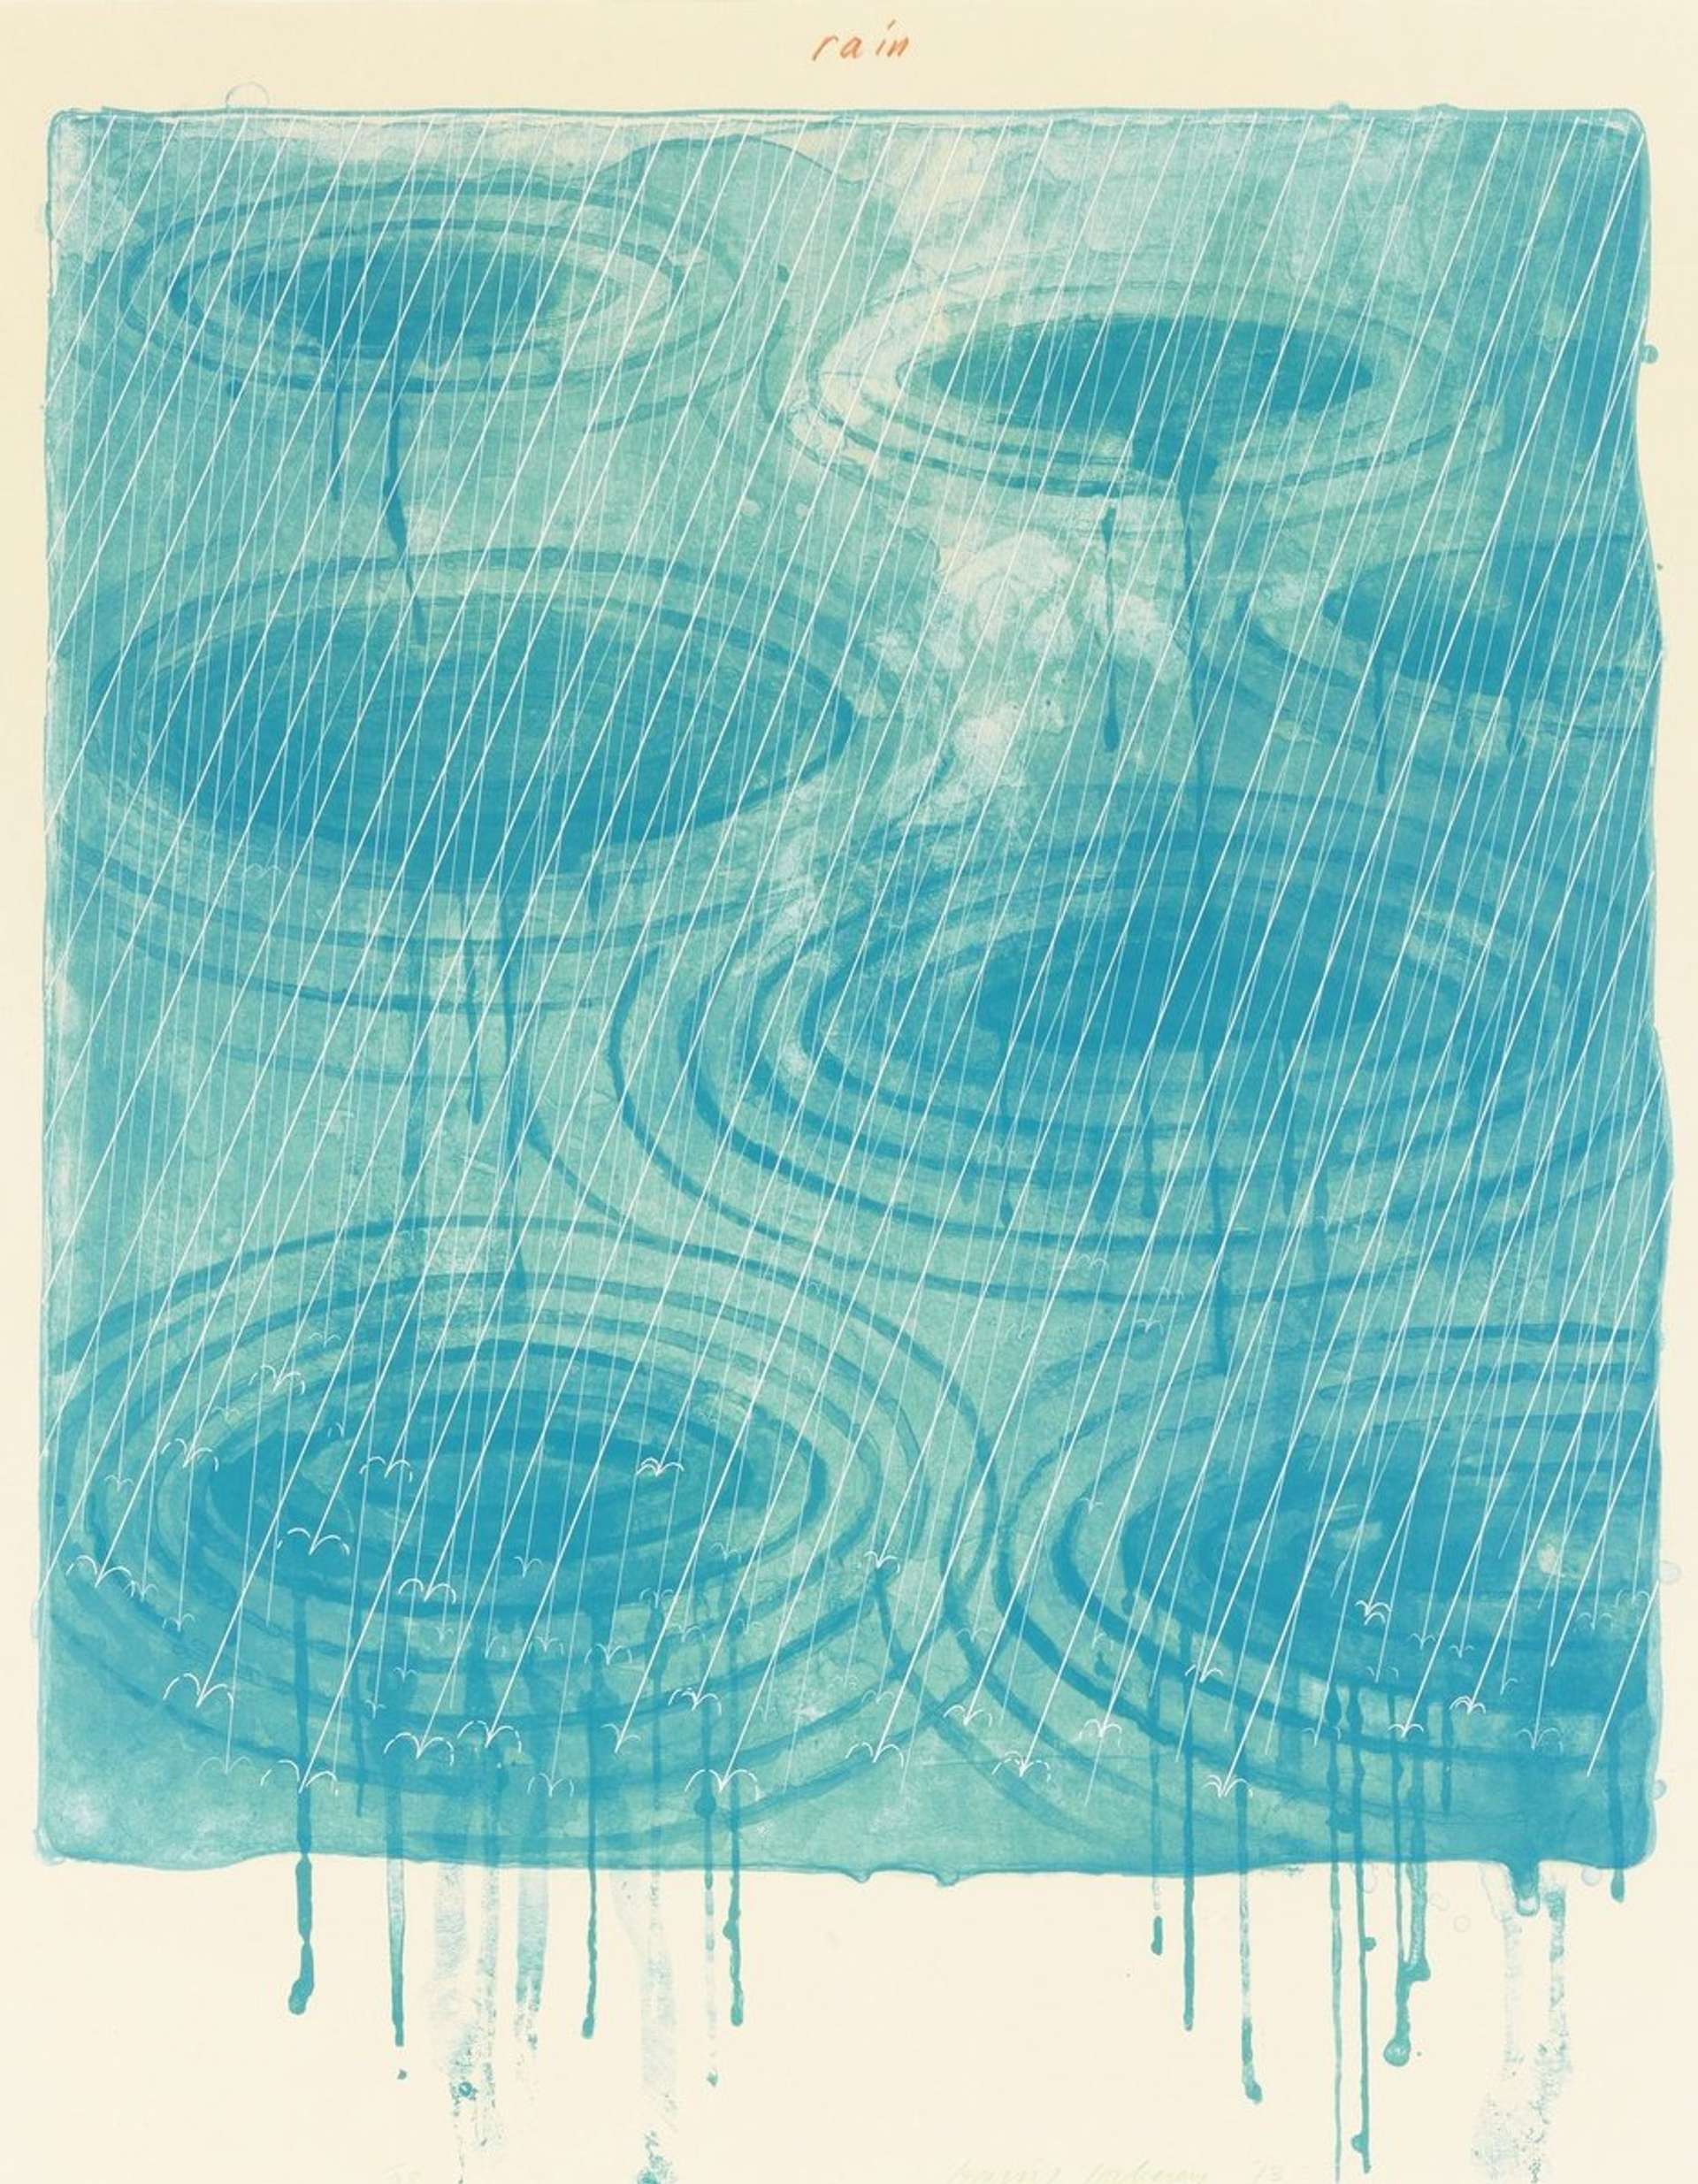 Rain by David Hockney